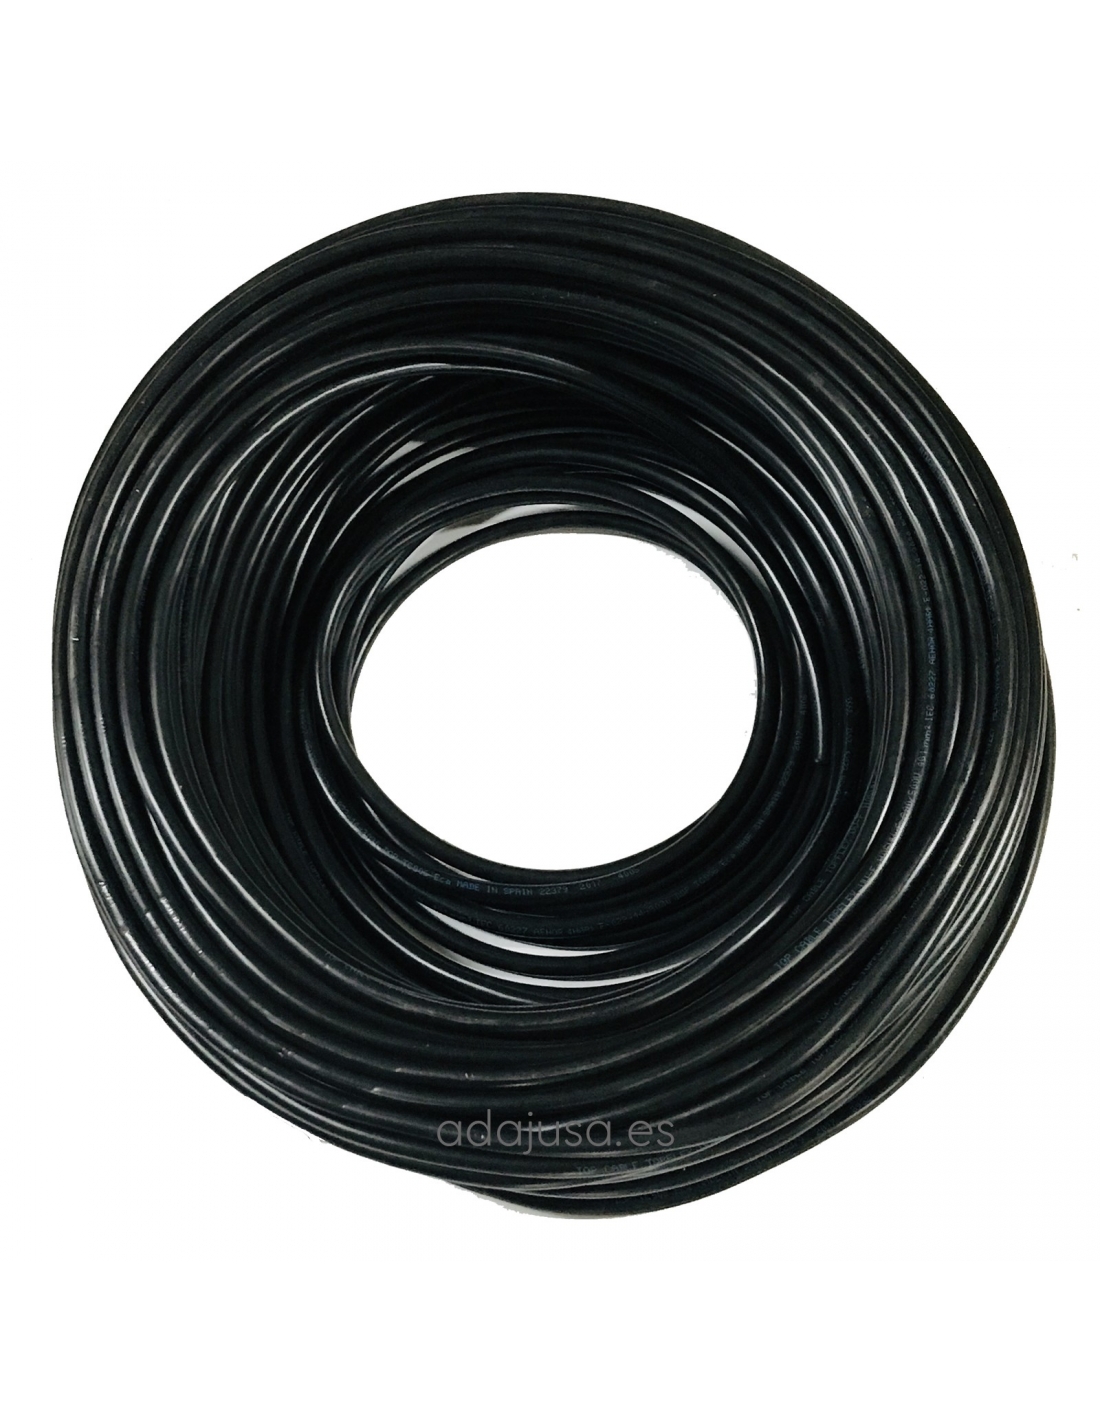 Yellow PVC hose 5mm ID 8mm OD 20m length 